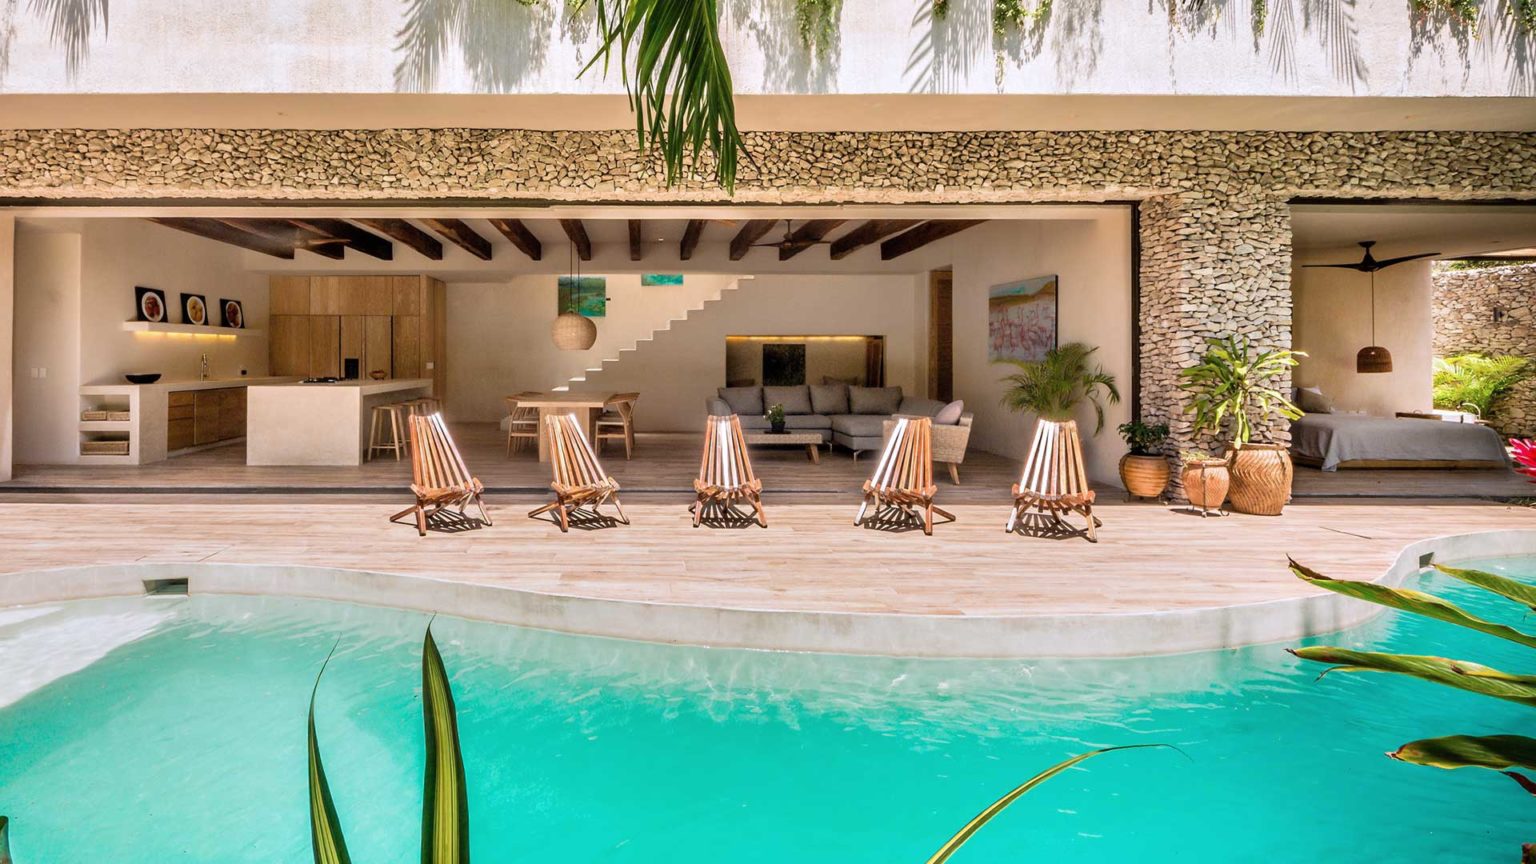 6 Luxe Private Home Rentals Nestled in Nature | Marriott Bonvoy Traveler